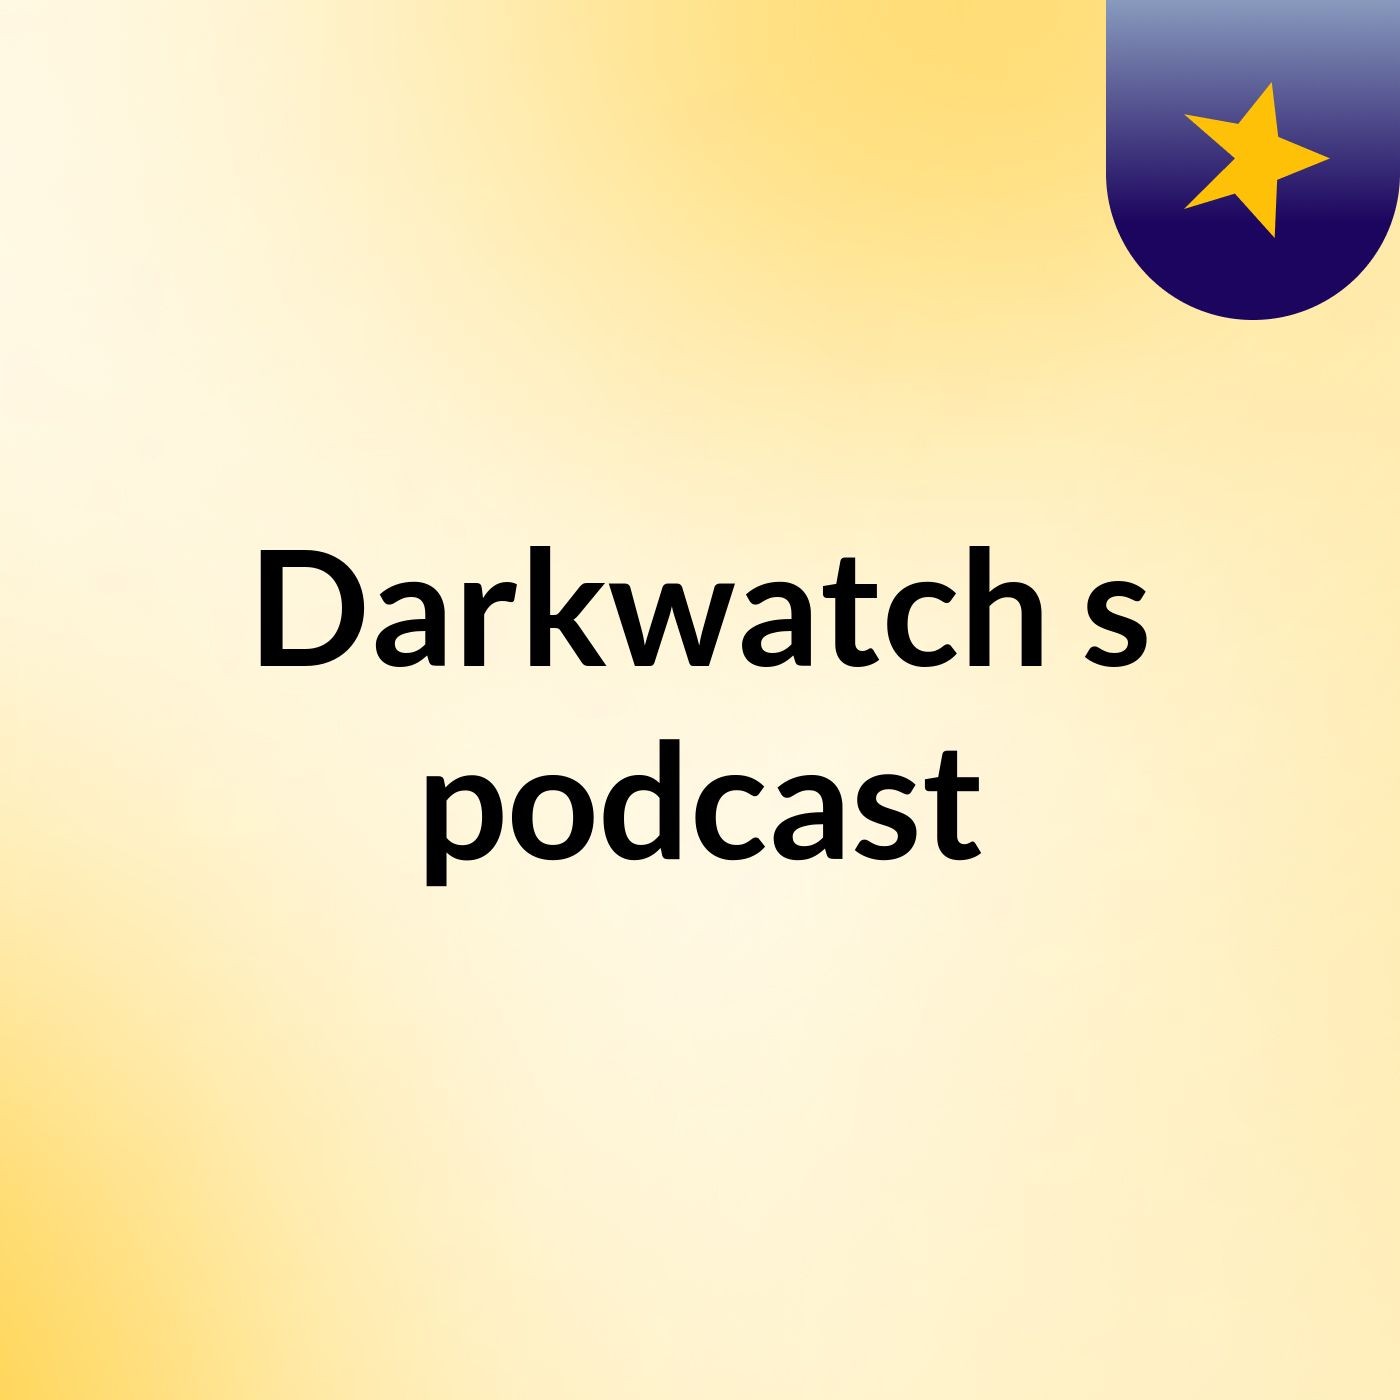 Darkwatch's podcast